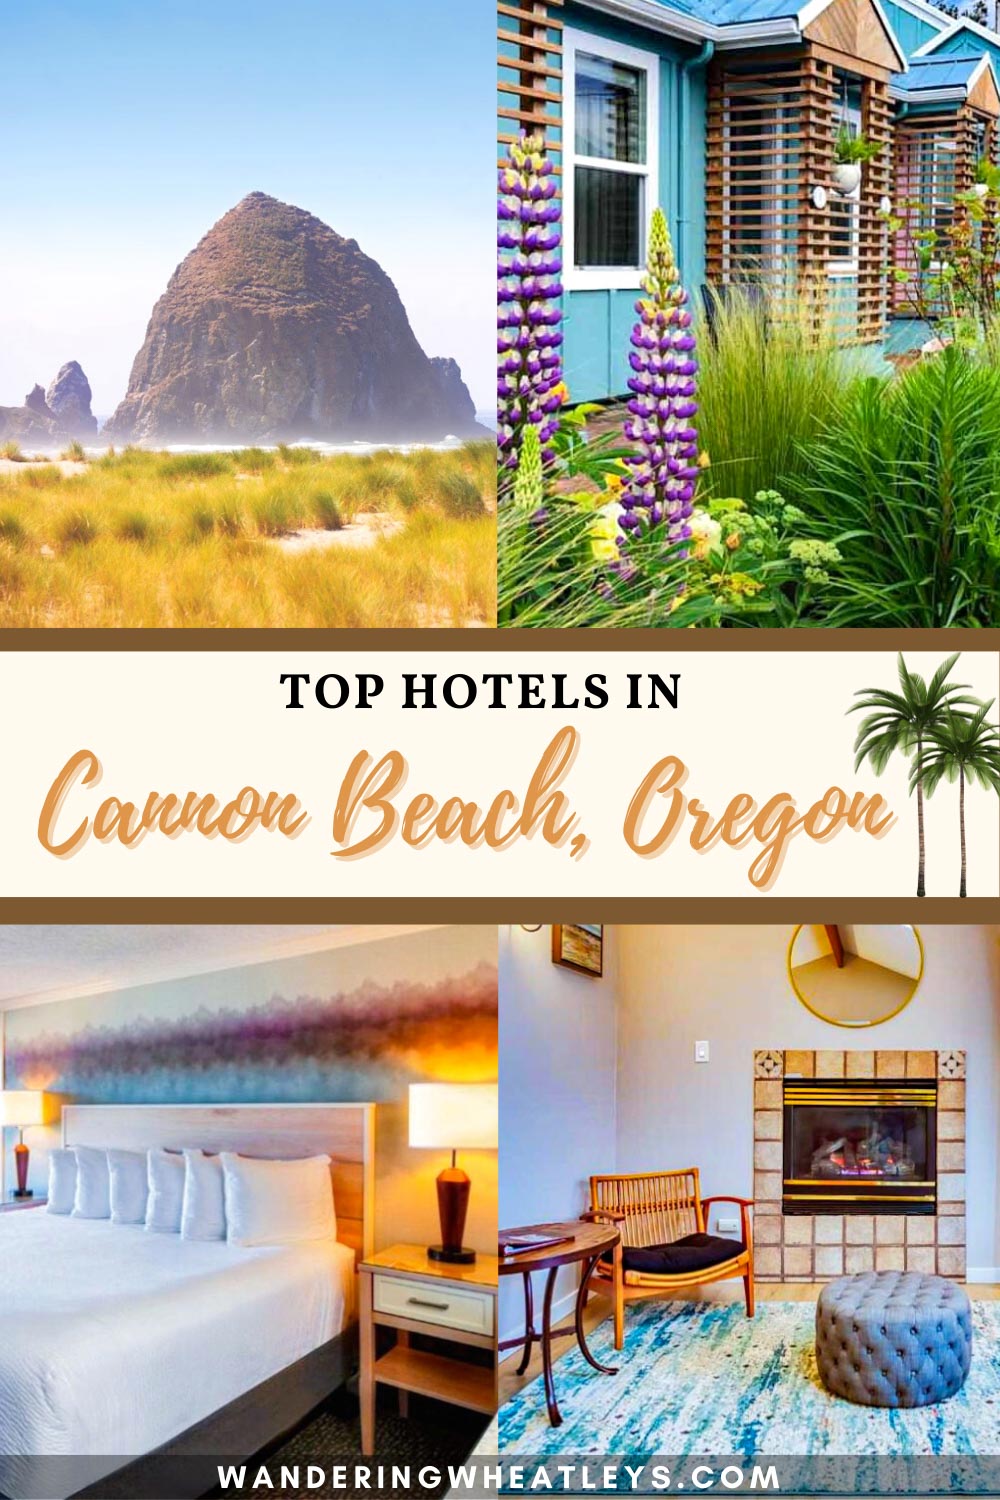 Best Hotels in Cannon Beach, Oregon